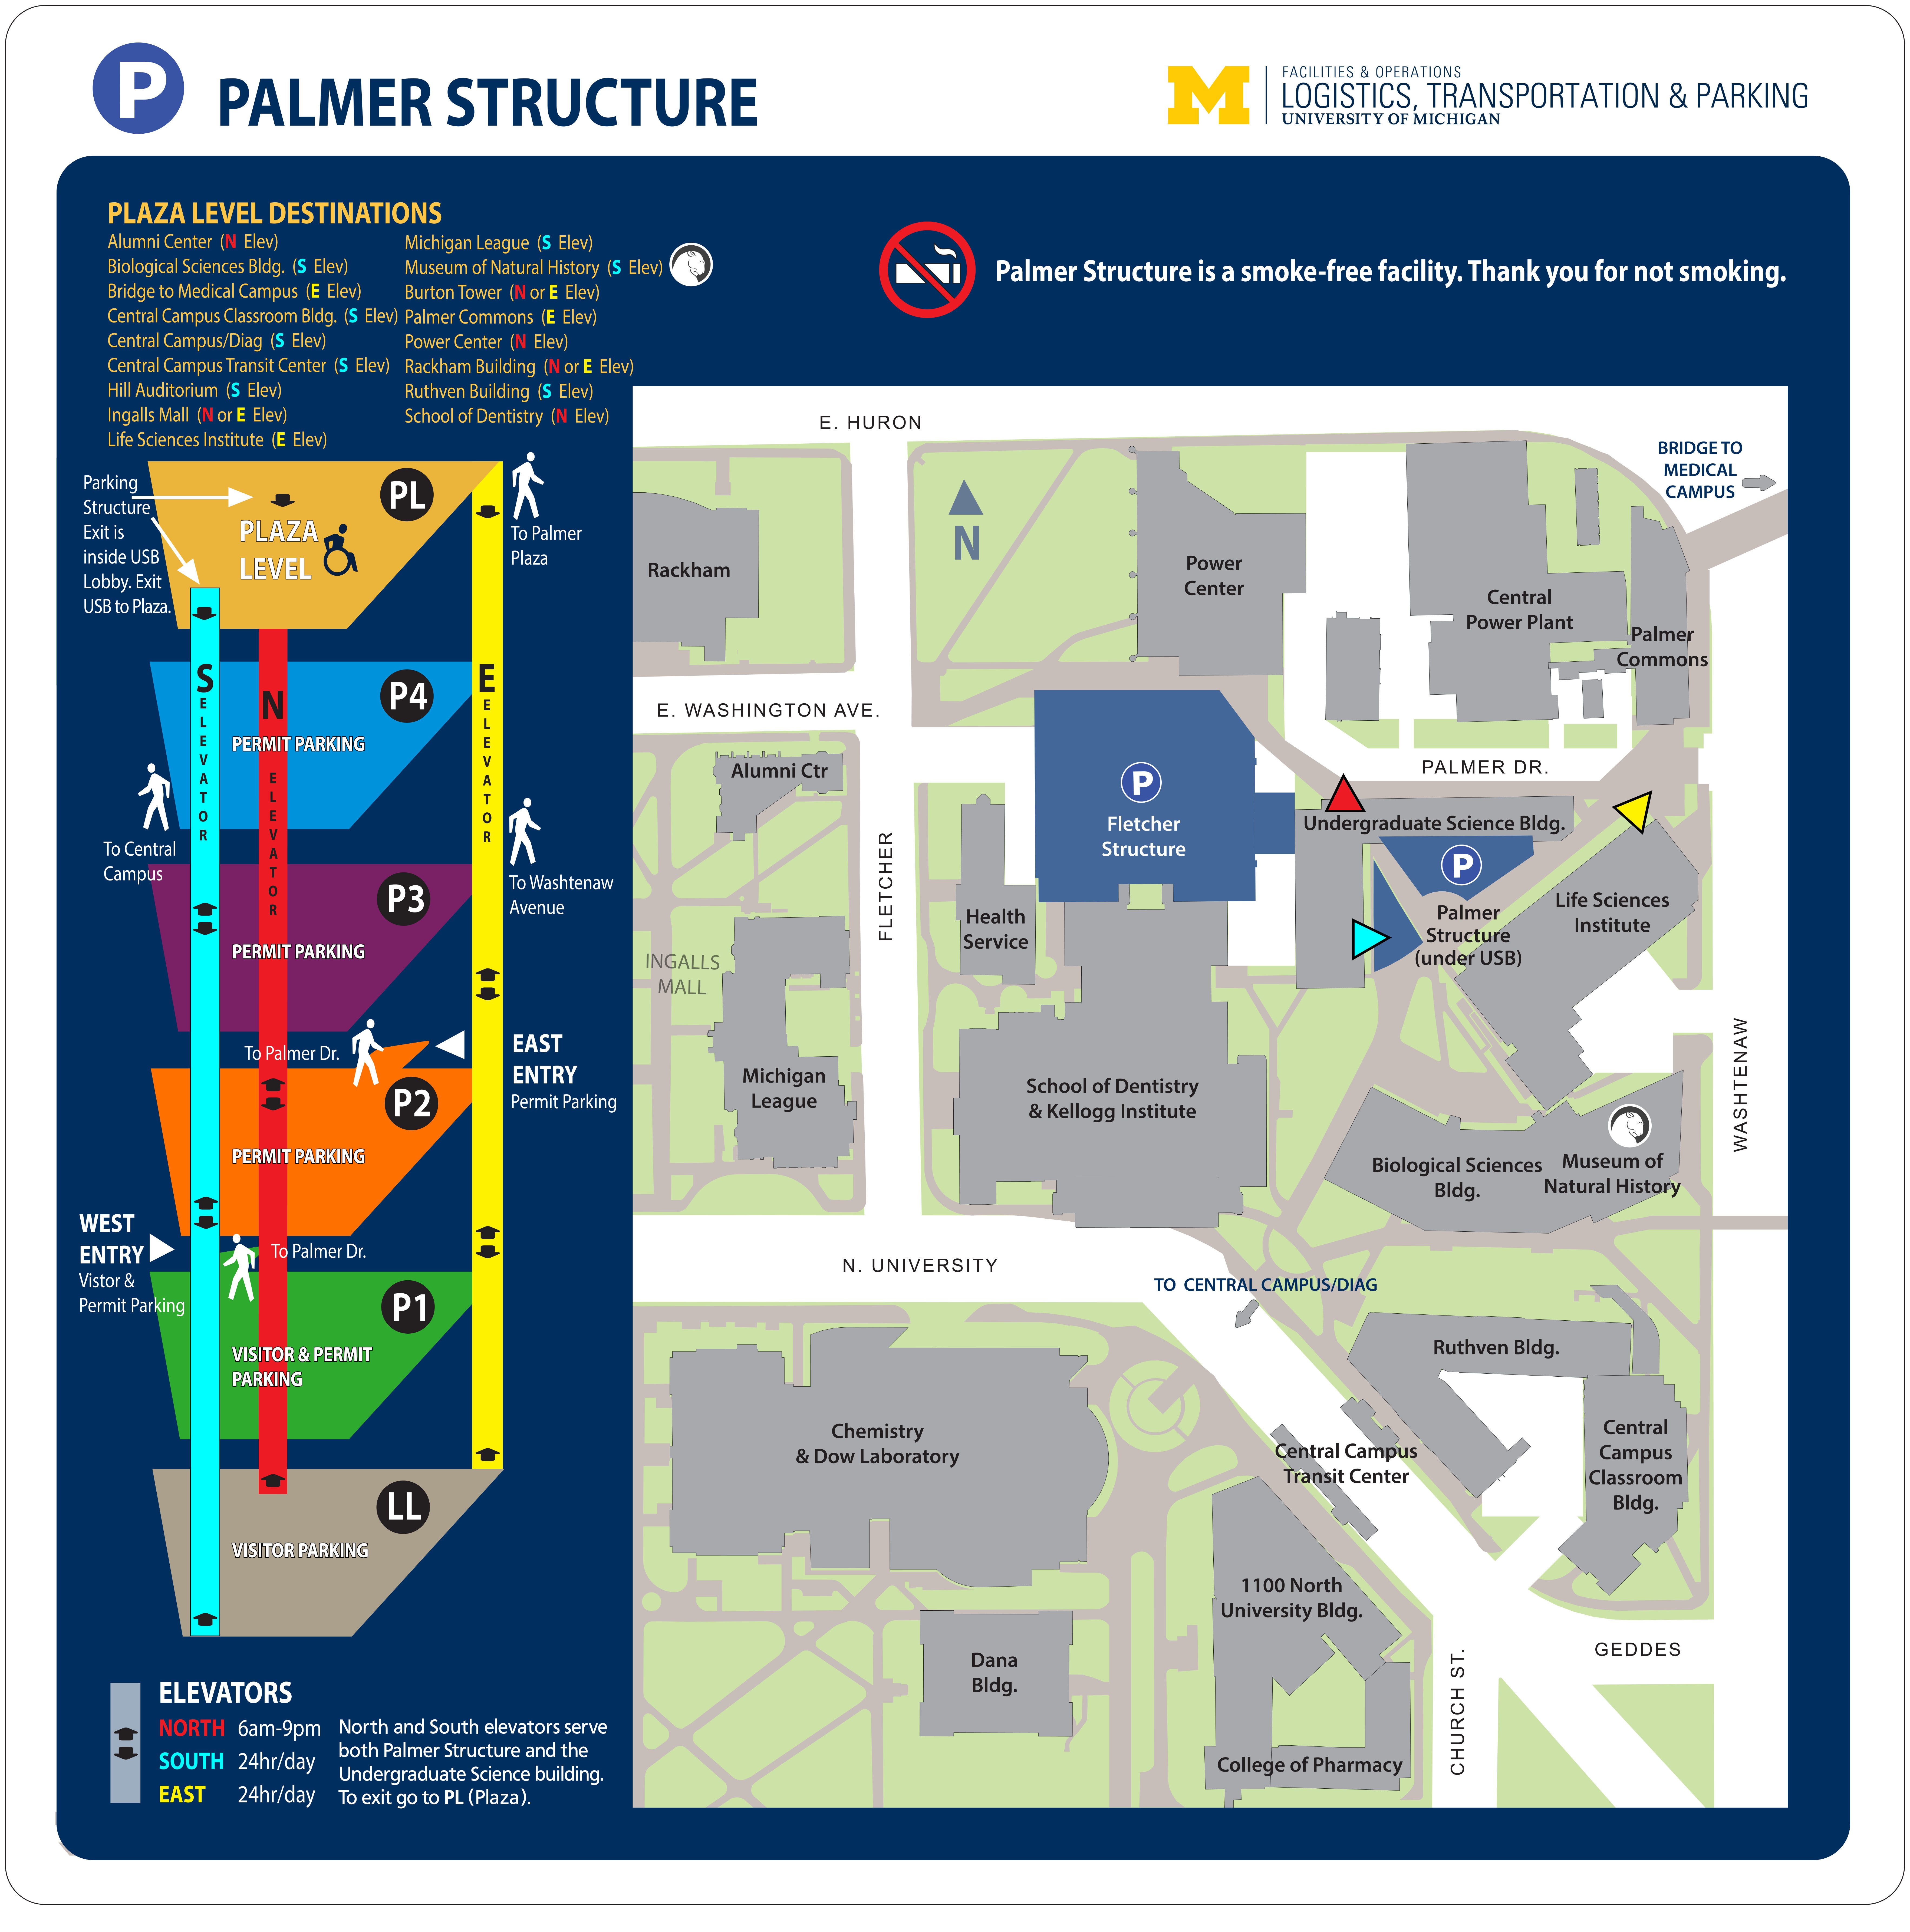 Palmer Parking map and elevator level destination